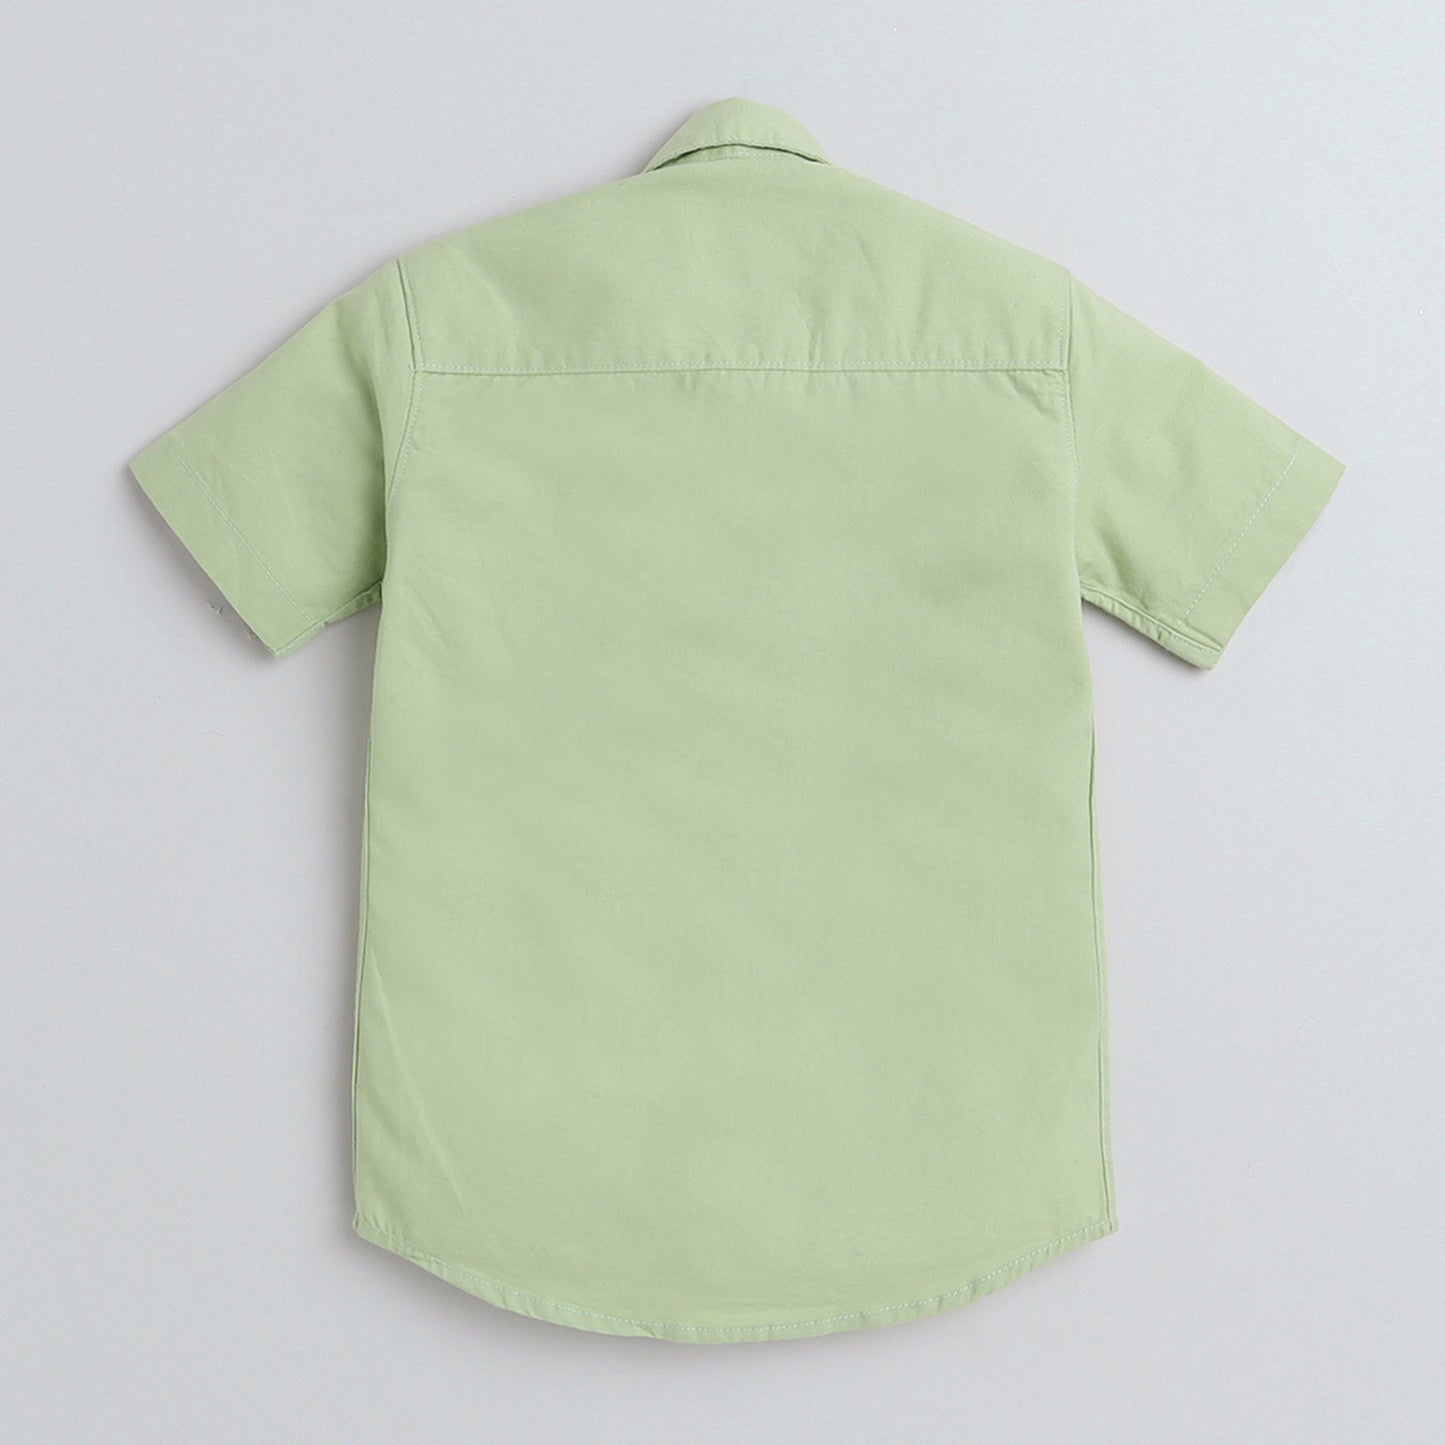 Polka Tots Cotton Regular Fit Half Sleeve Summer USA Metallic Print Shirt - Pista Green